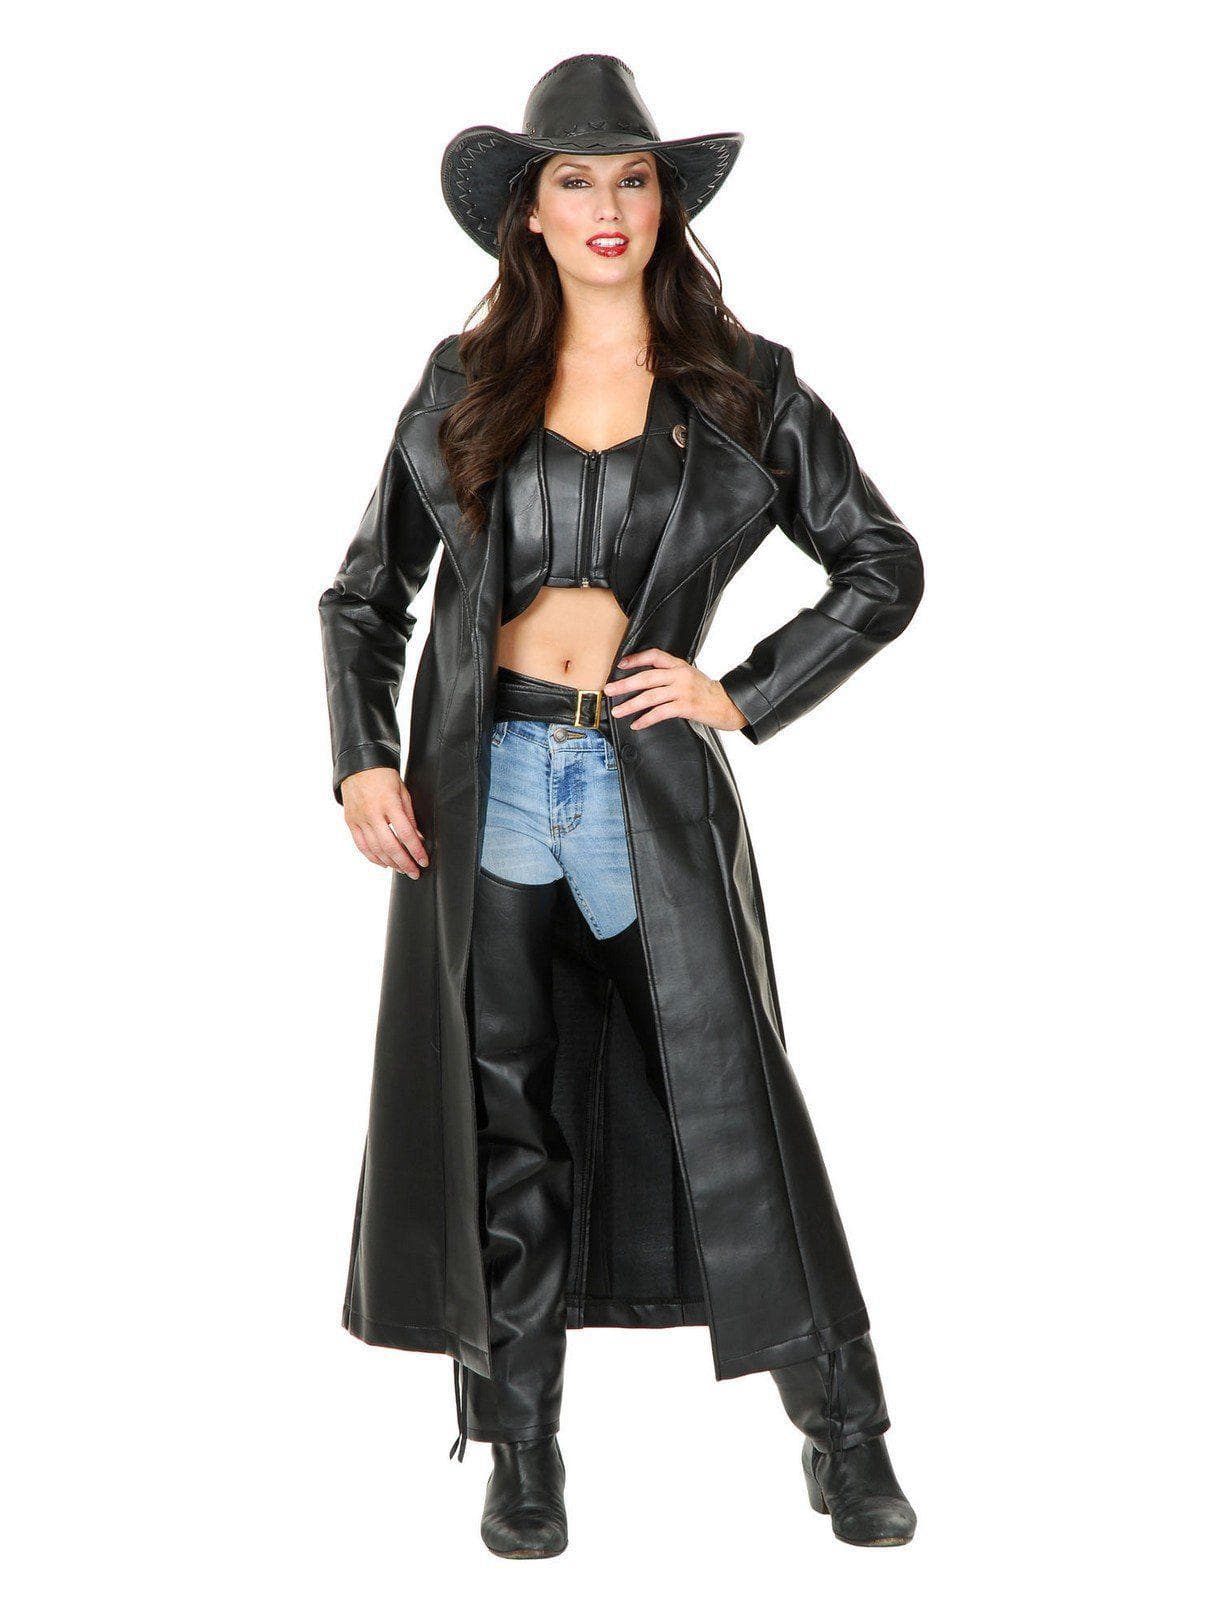 Adult Ladies Leather Duster Costume - costumes.com